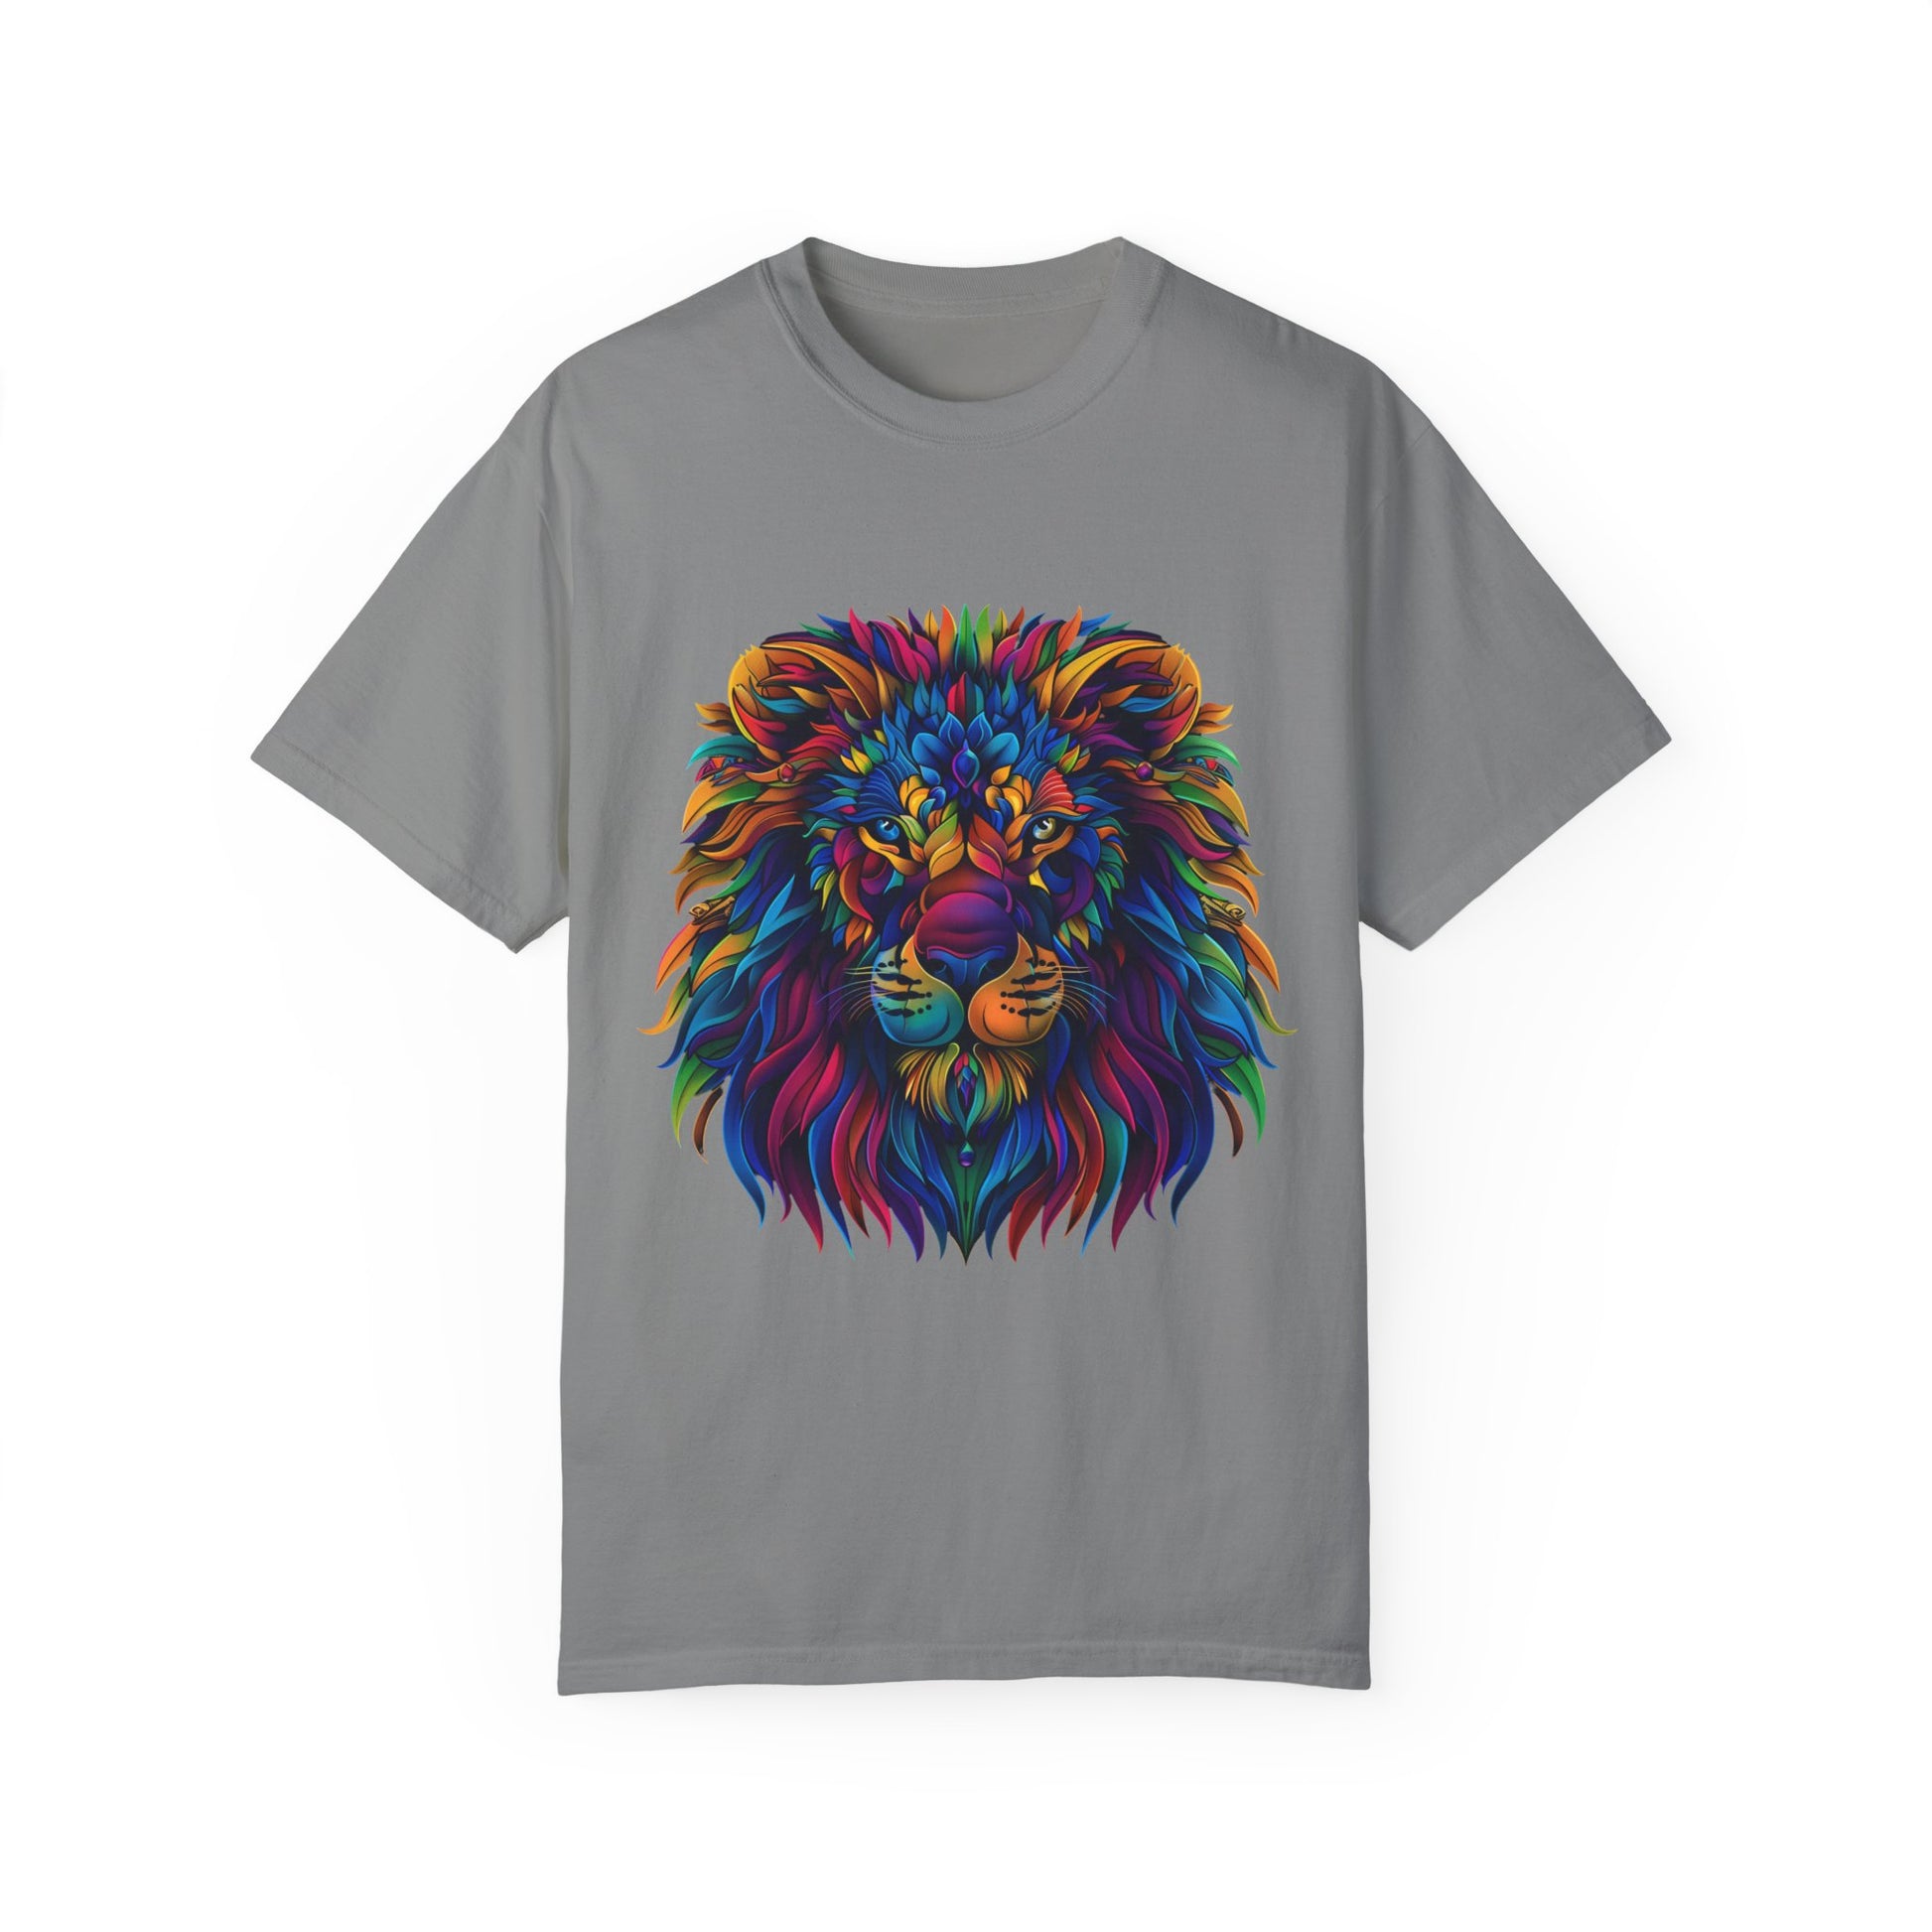 Lion Head Cool Graphic Design Novelty Unisex Garment-dyed T-shirt Cotton Funny Humorous Graphic Soft Premium Unisex Men Women Granite T-shirt Birthday Gift-14